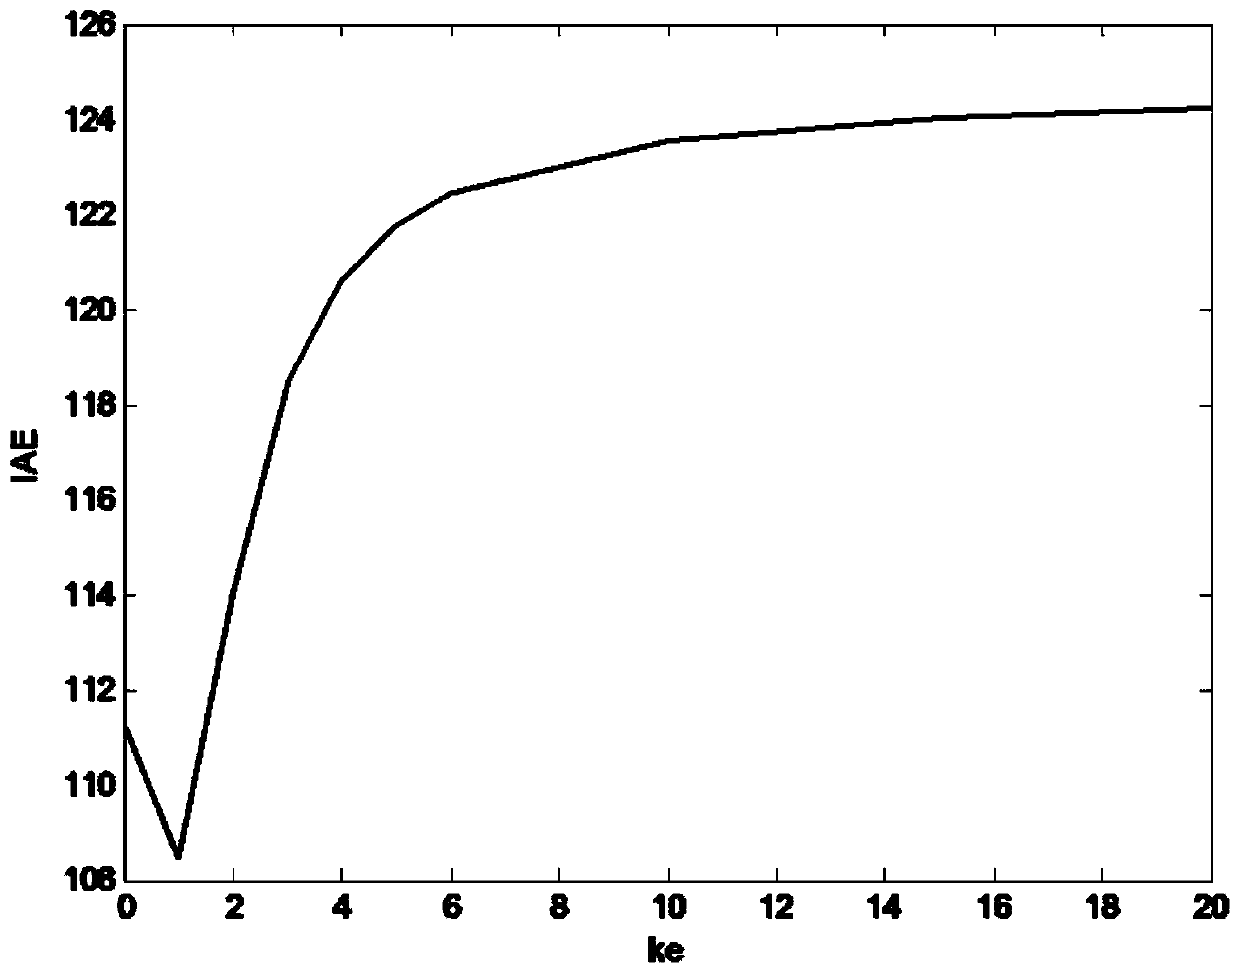 Gap multi-model weighting function parameter self-tuning method